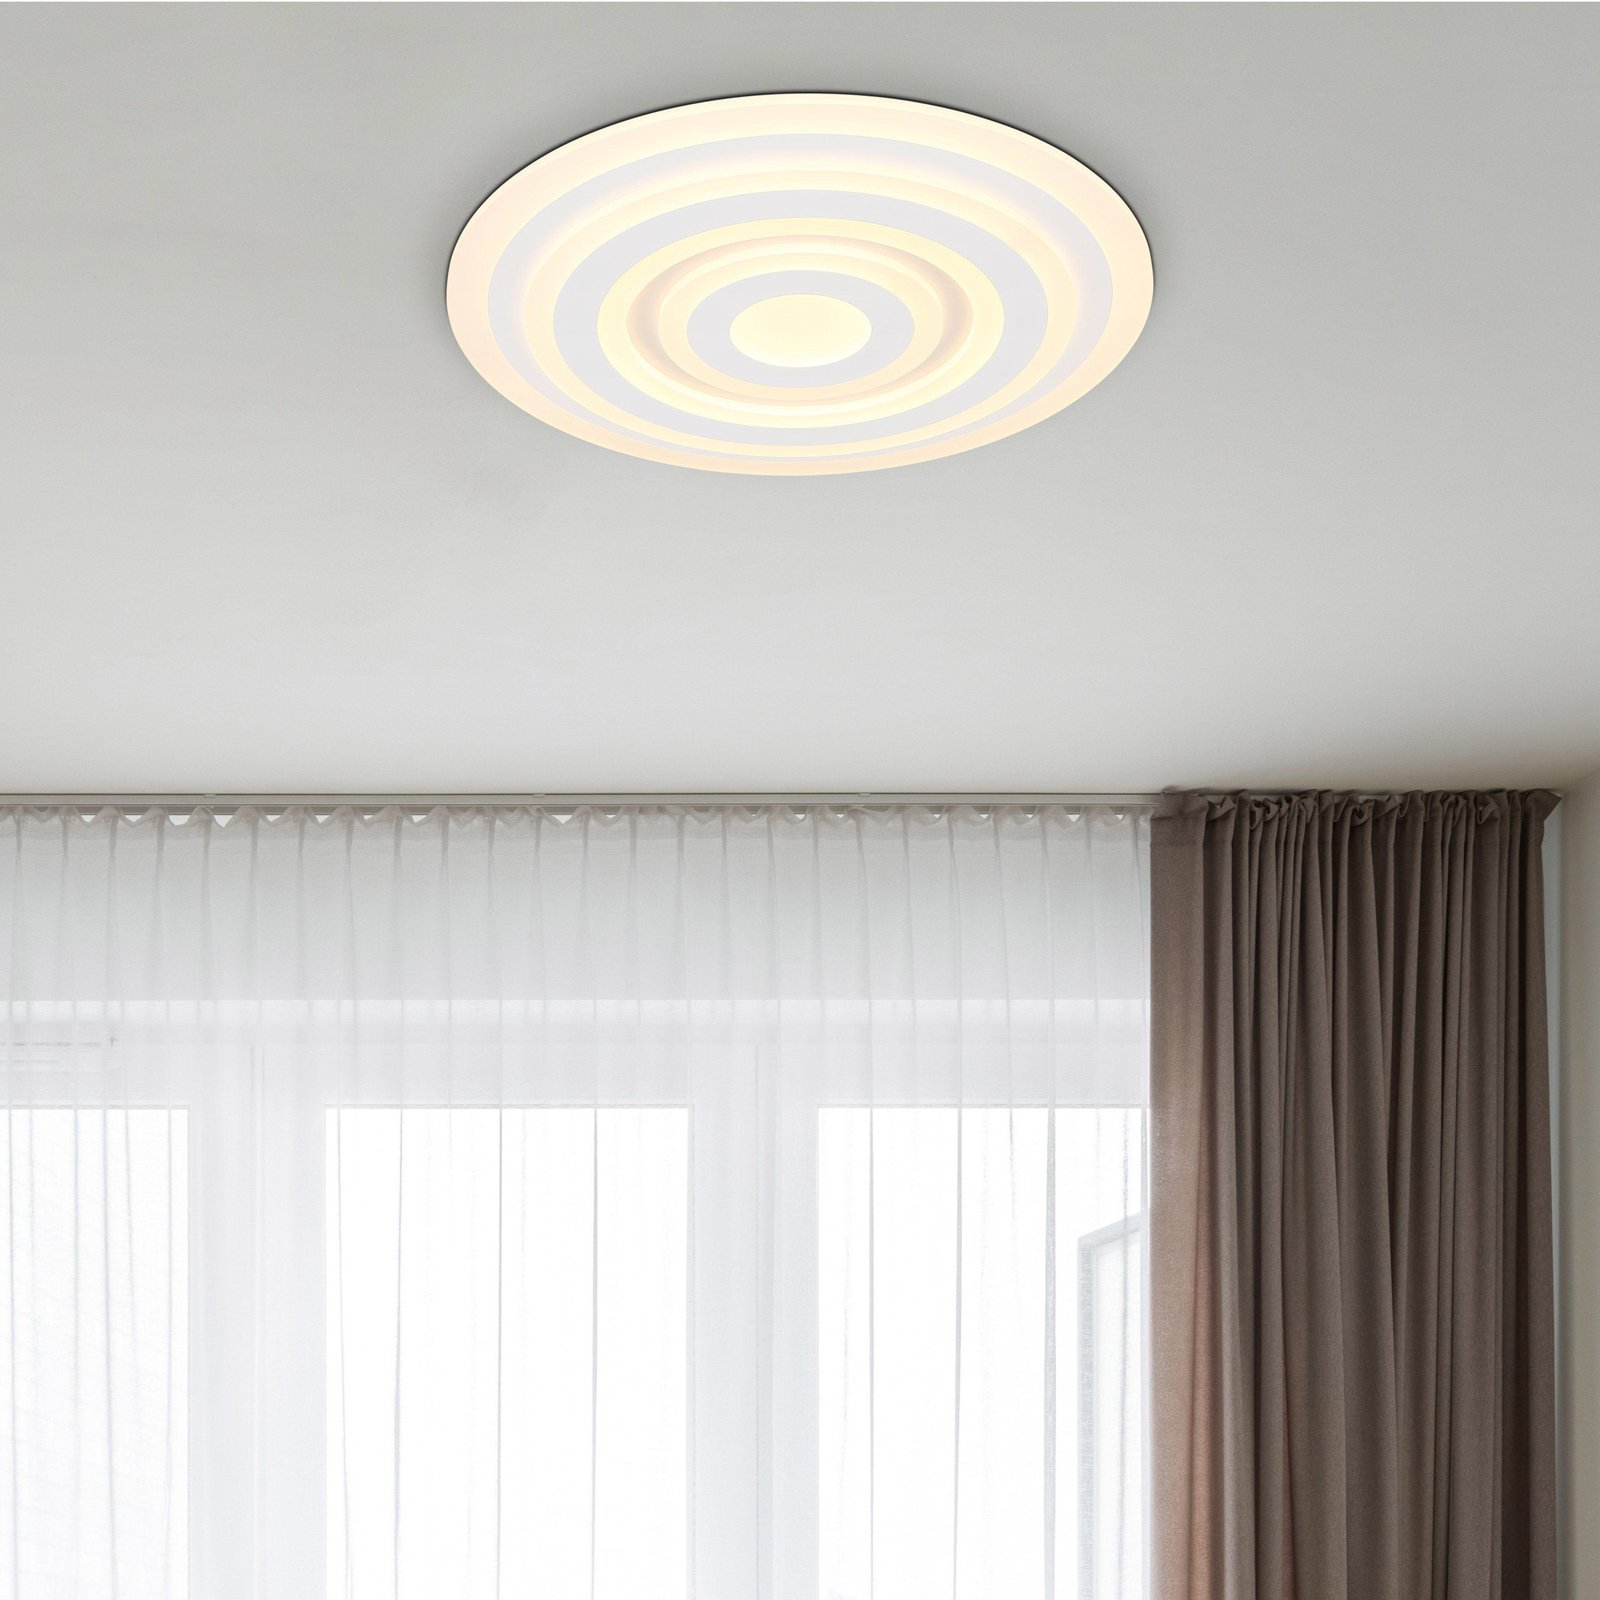 LED-Deckenleuchte Alois, weiß, Ø 49 cm, Metall/Acryl